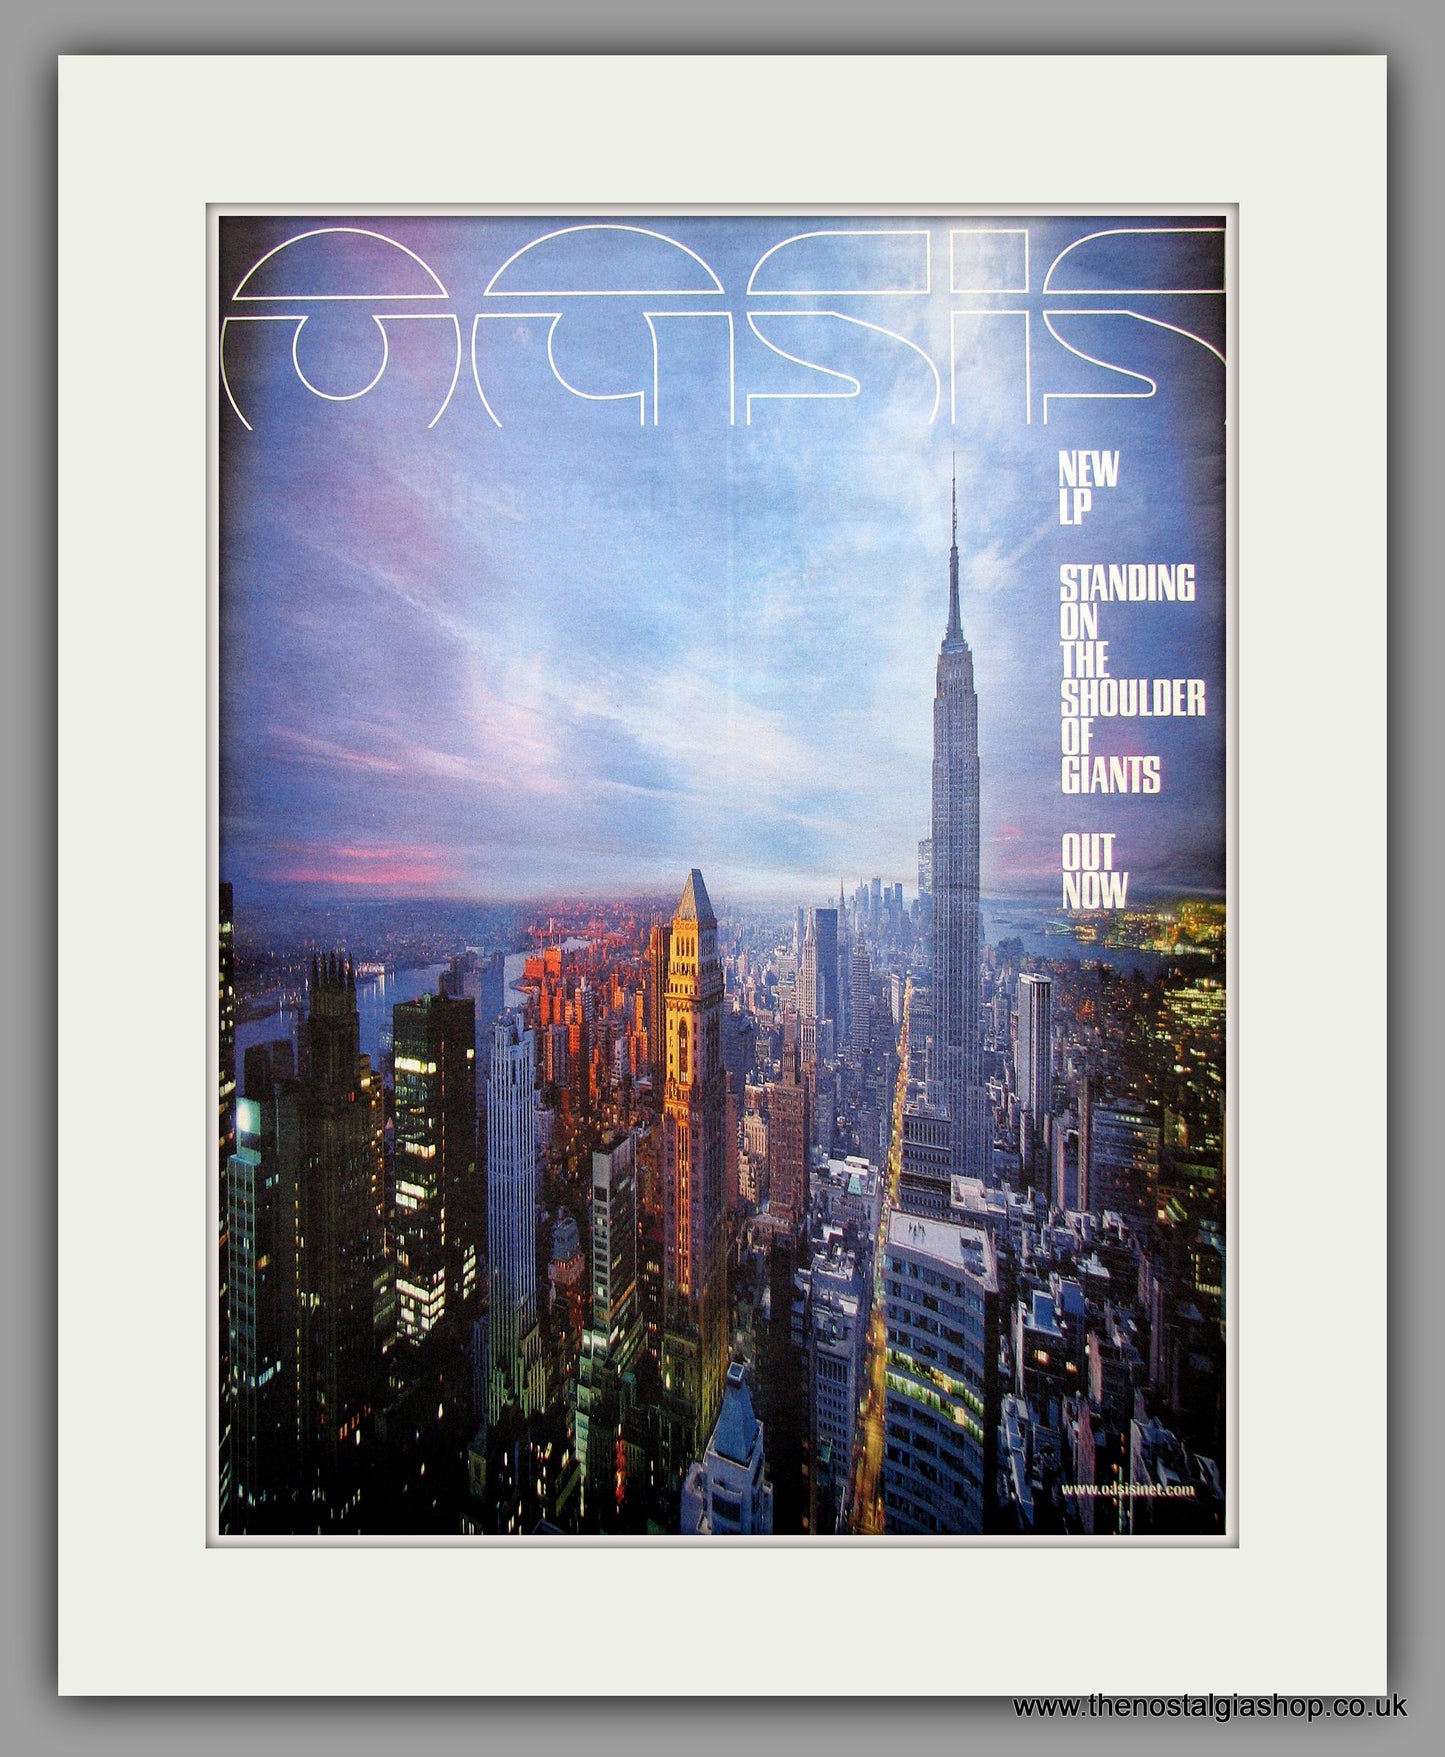 Oasis. Shoulders of Giants. Original Vintage Advert 2000 (ref AD11143)